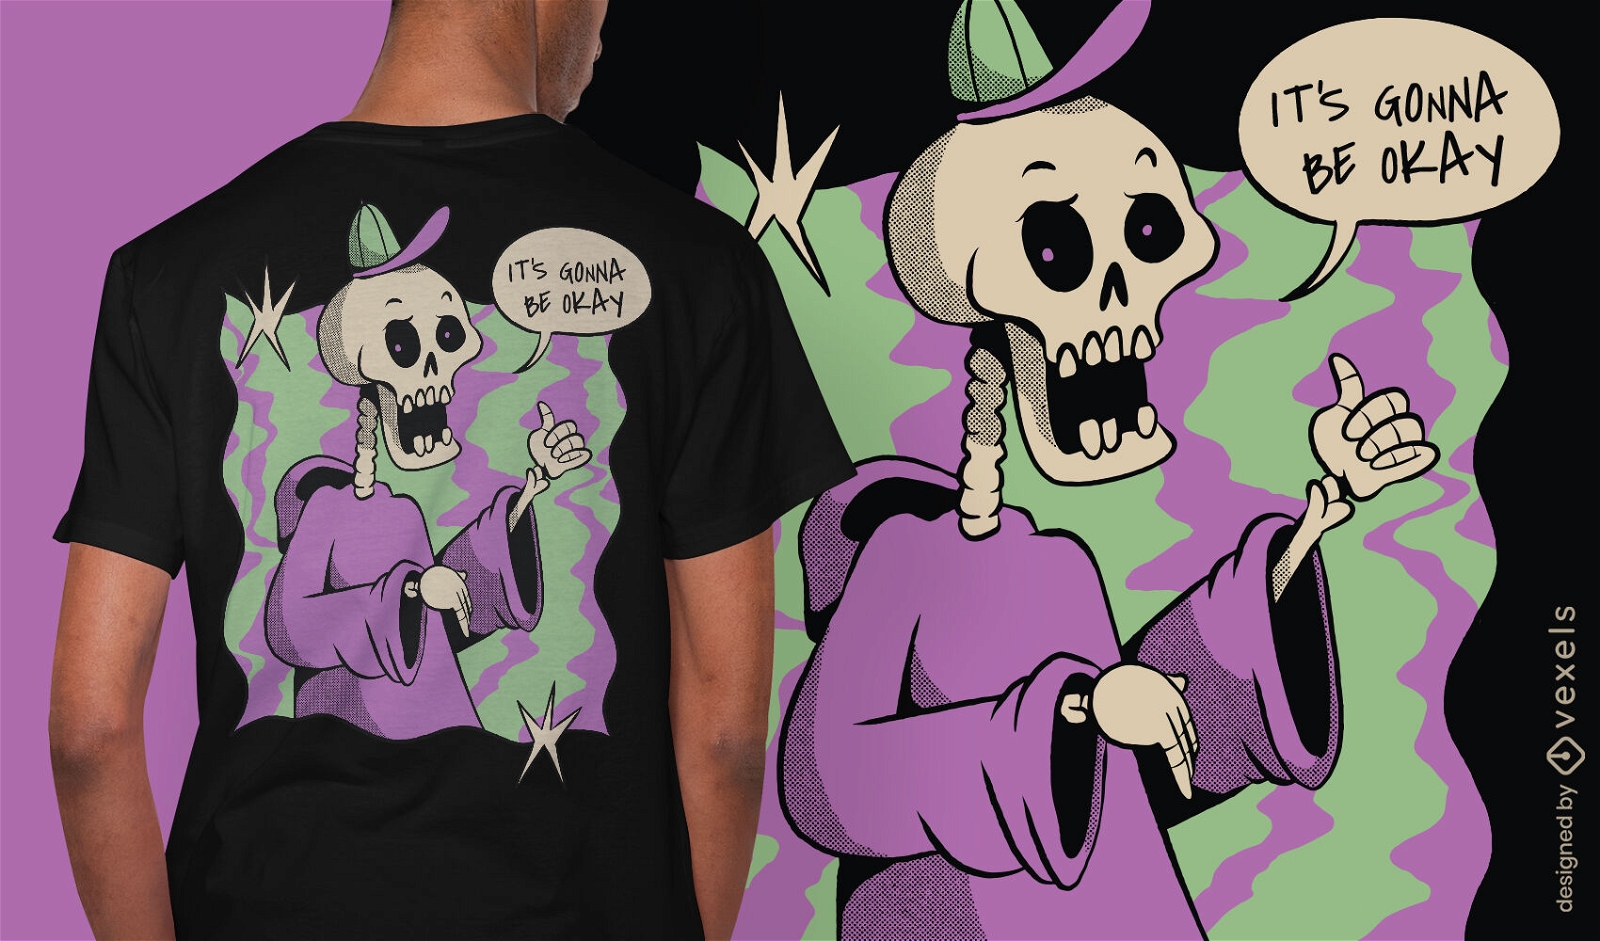 Esqueleto sendo design de camiseta de apoio